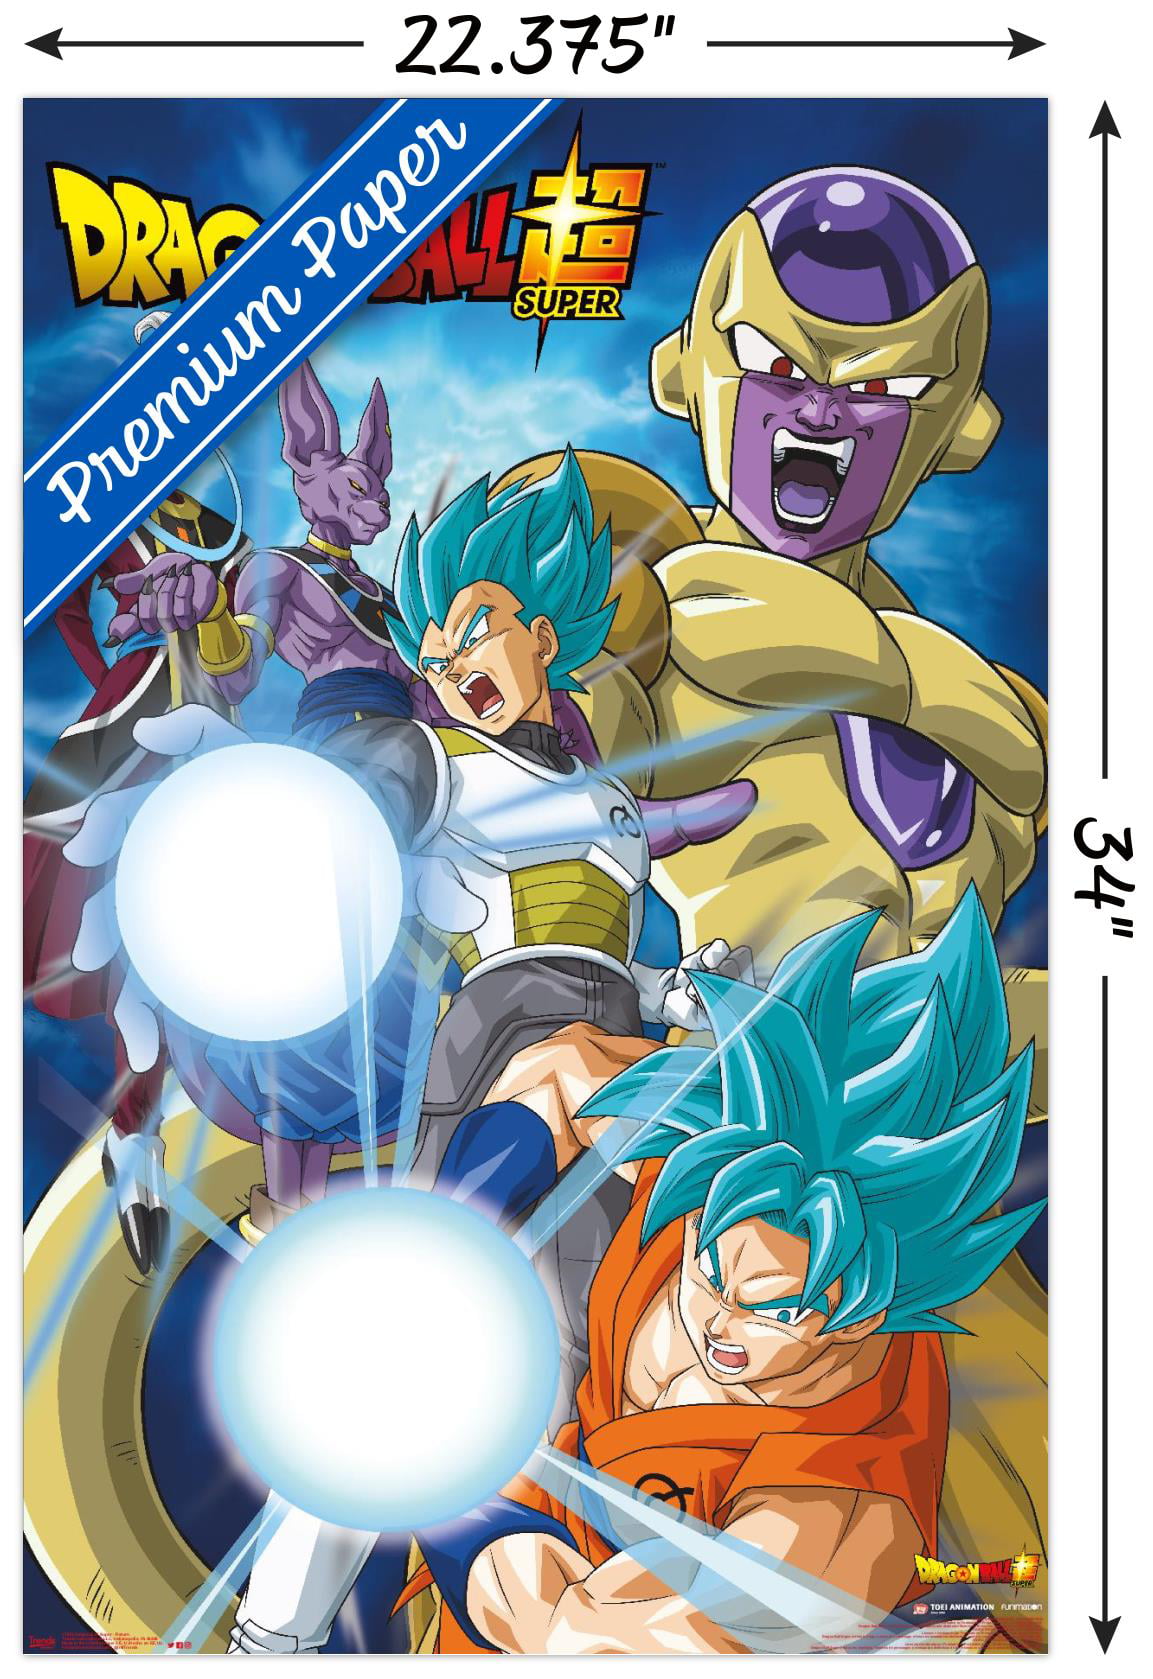 Dragon Ball Z Poster The Return of Cooler